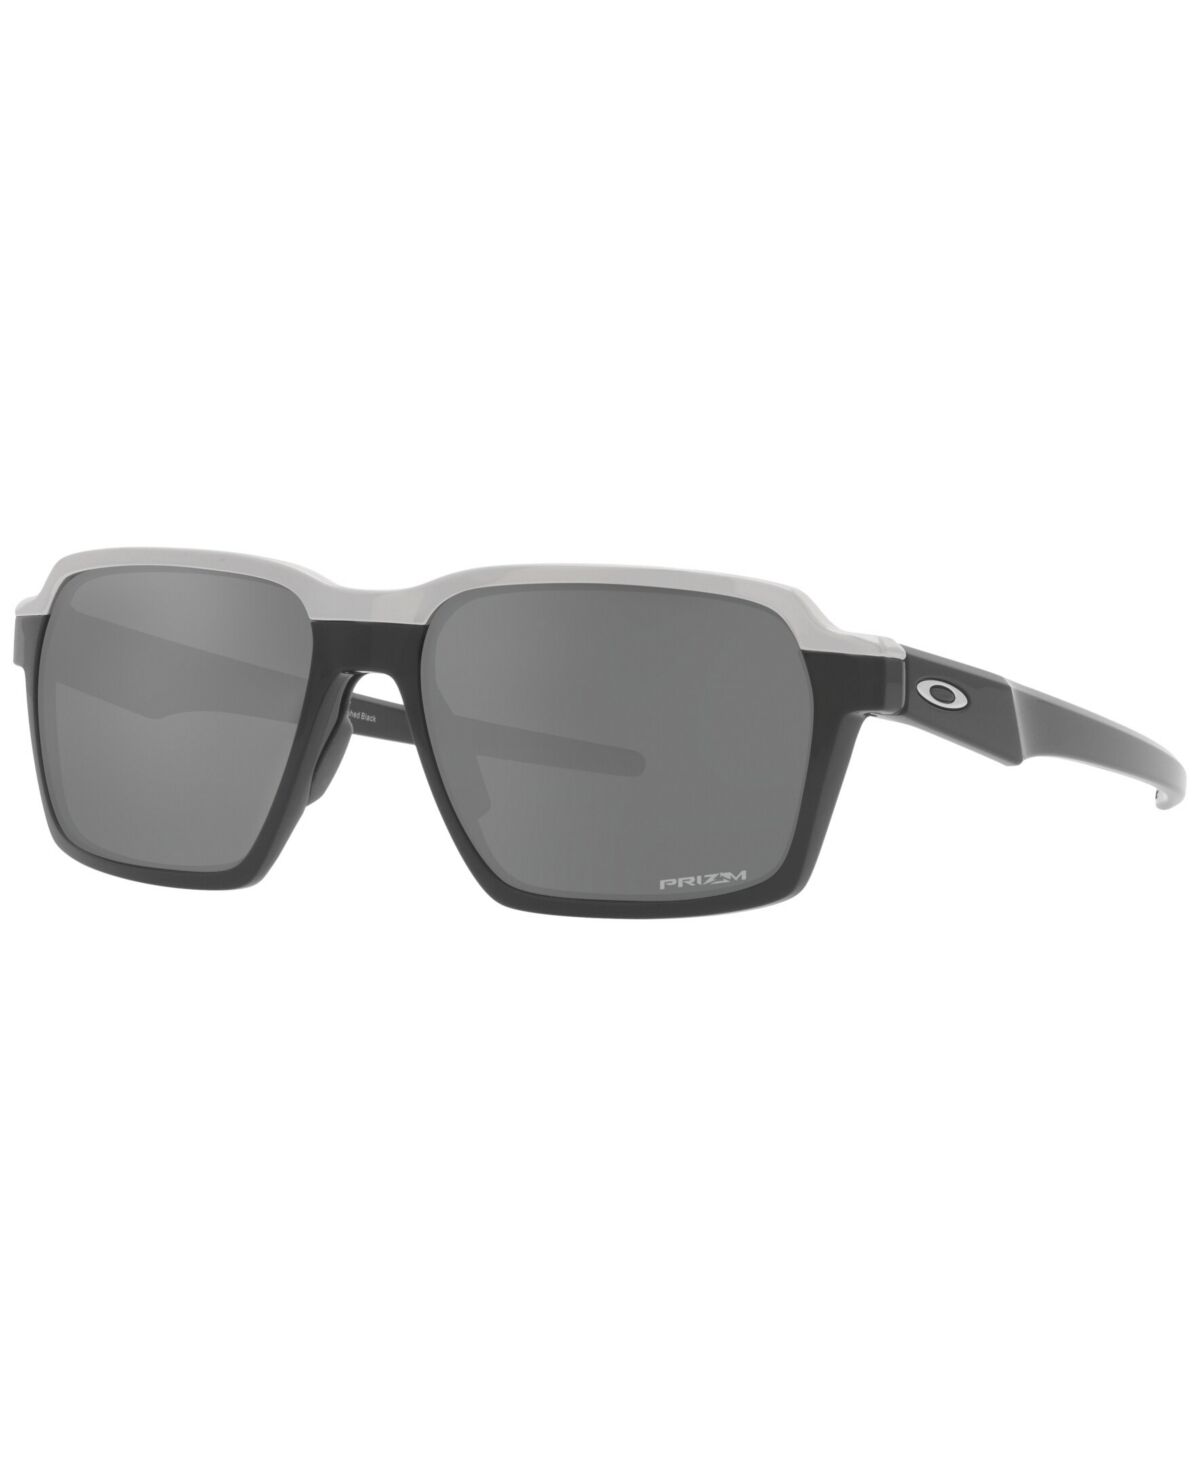 Oakley Men's Sunglasses, OO4143 Parlay 58 - Polished Black